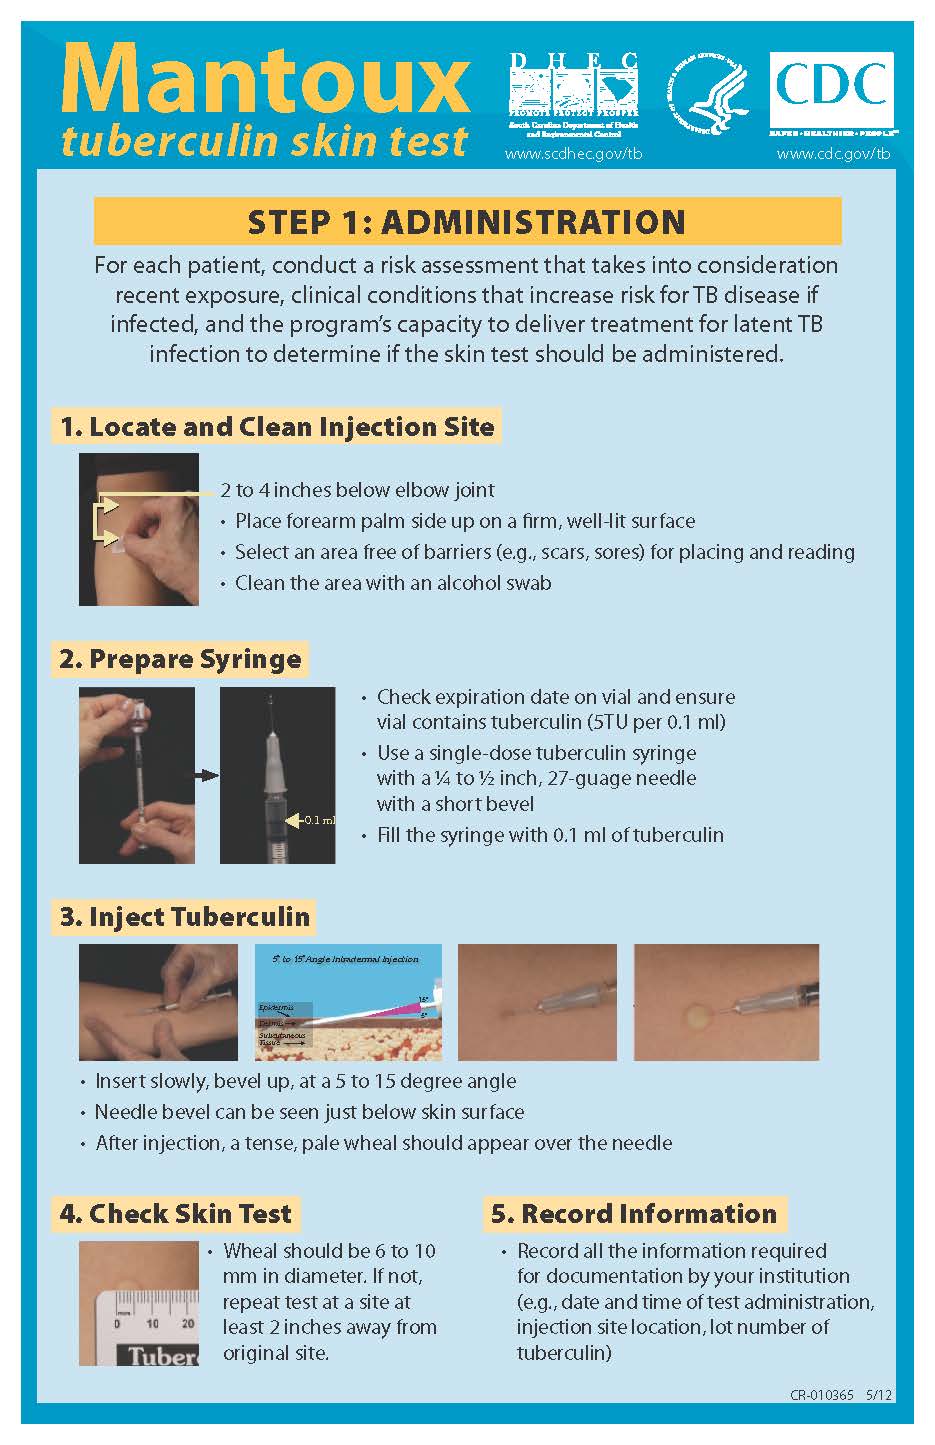 Mantoux Tuberculin Skin Test poster image